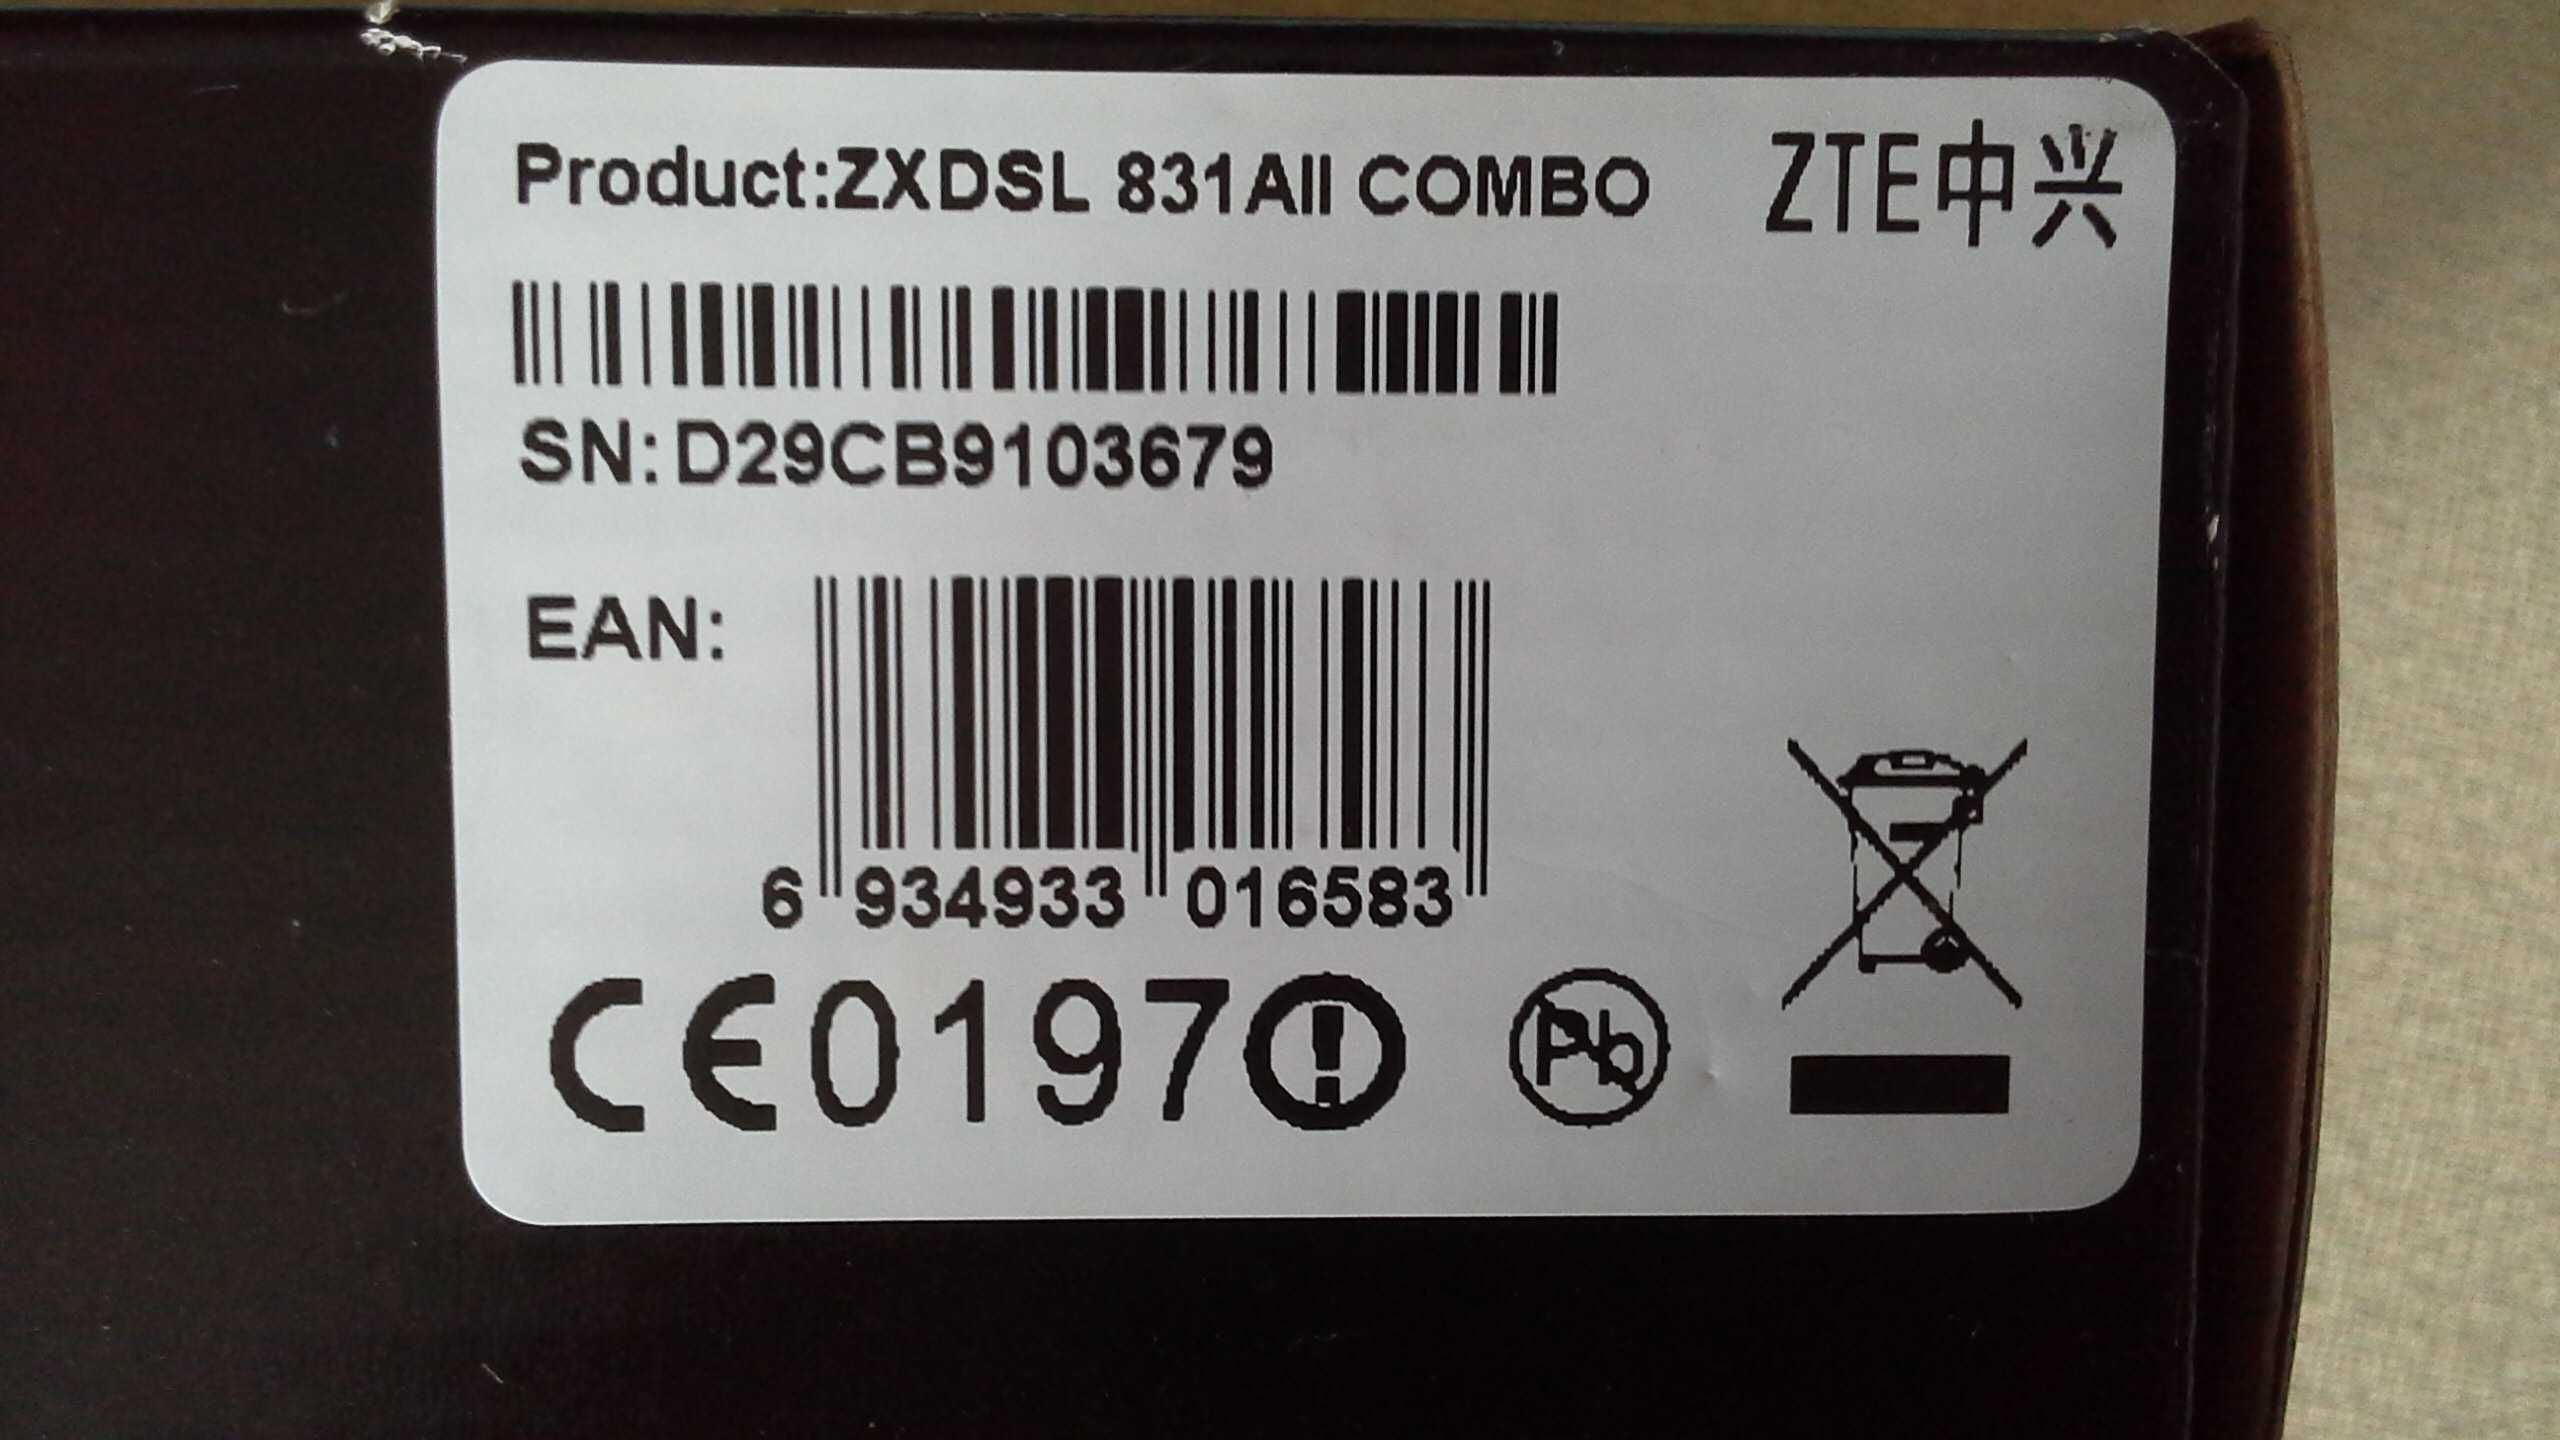 Router Combo ZTE Orange ZXDSL 831 All Combo kompletny zestaw